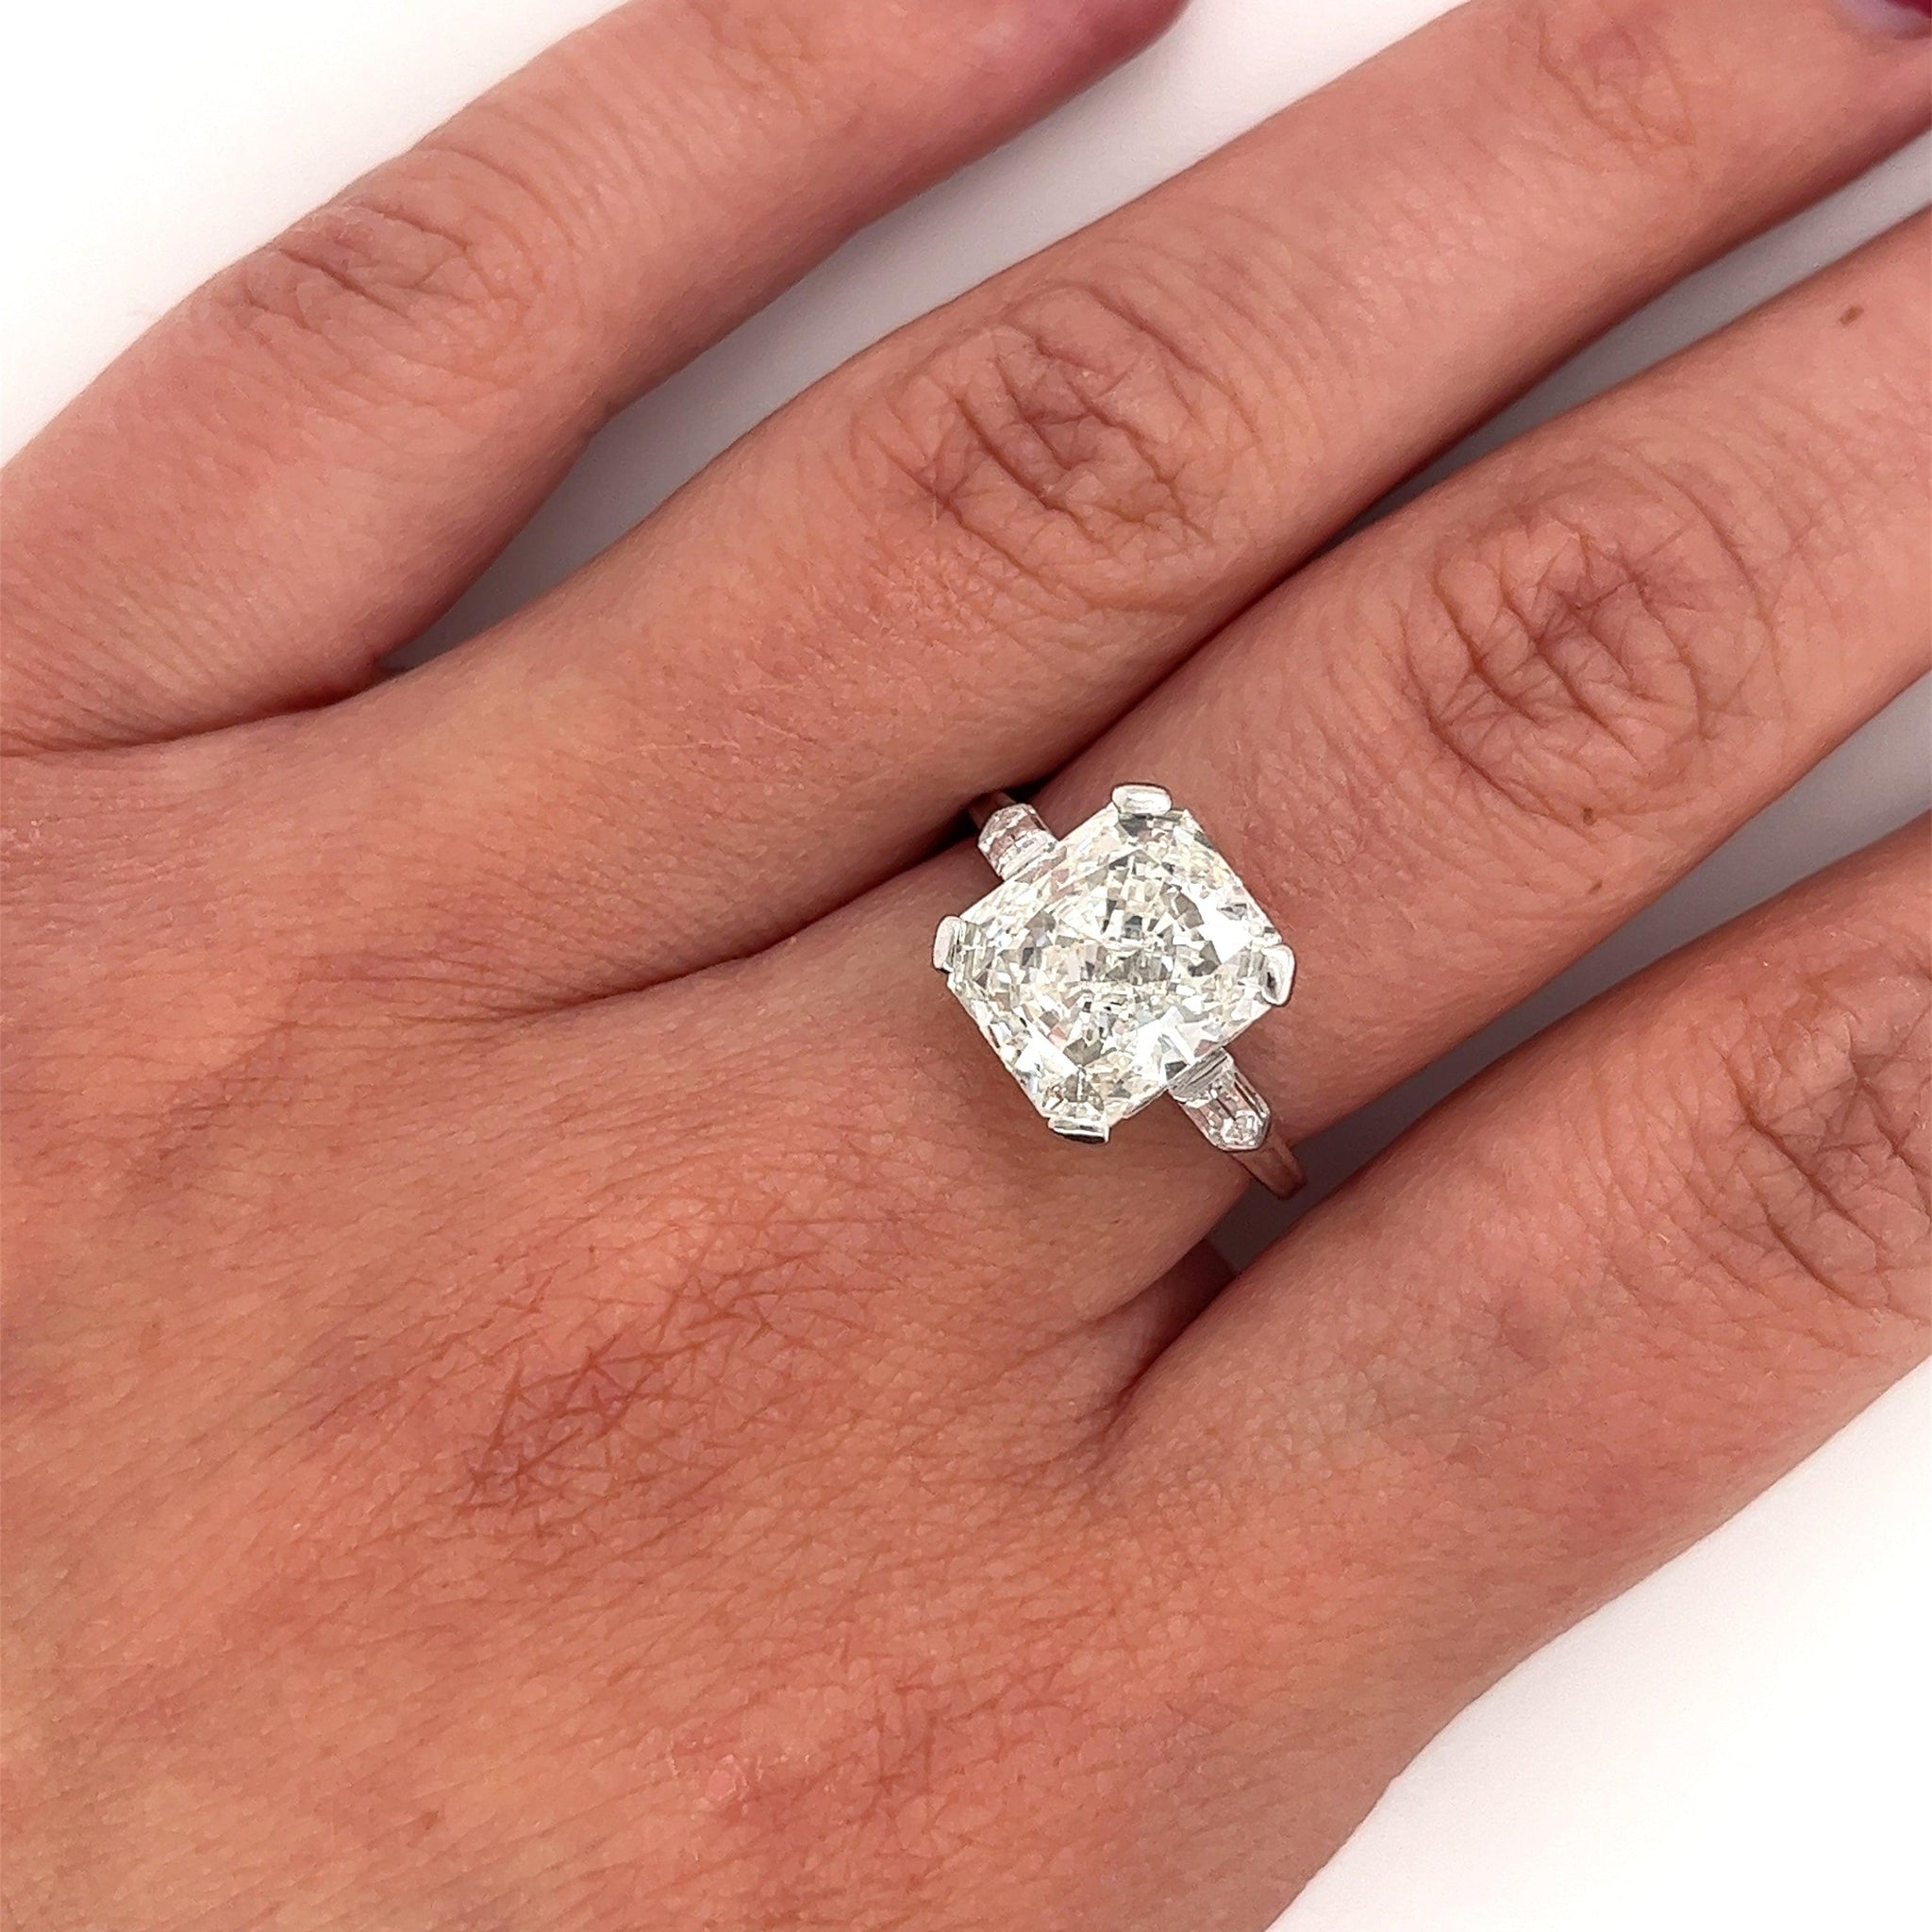 IGI Certified 5 Carat Lab Grown CVD Diamond Art Deco Engagement Ring in Platinum with 2 Bullet Cut Side Stones